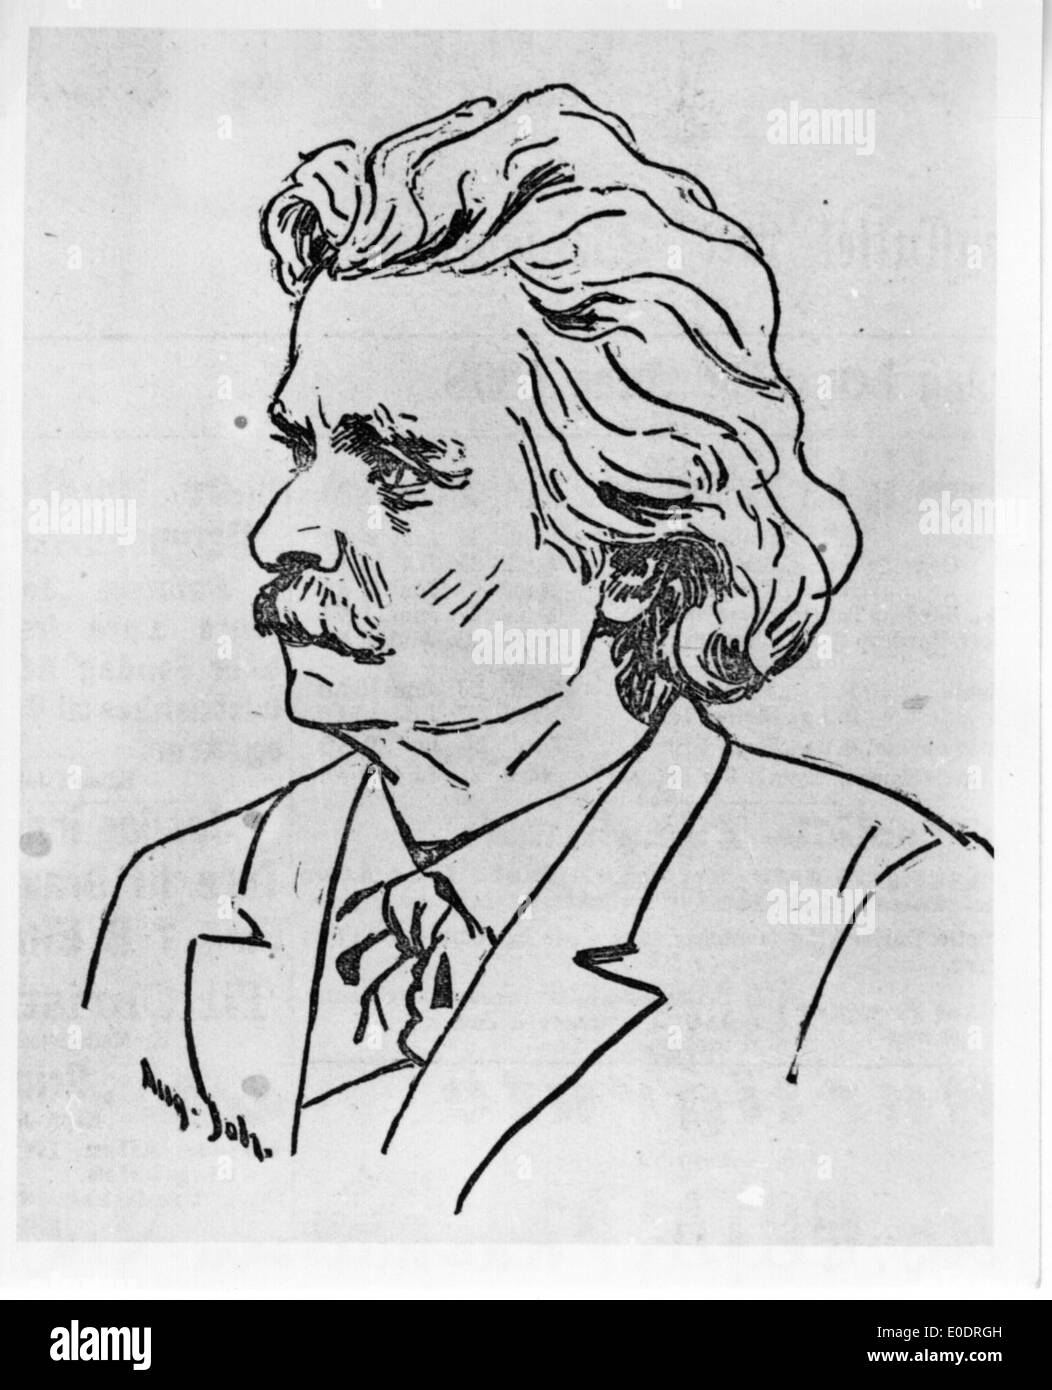 Edvard Grieg portrait Stock Photo